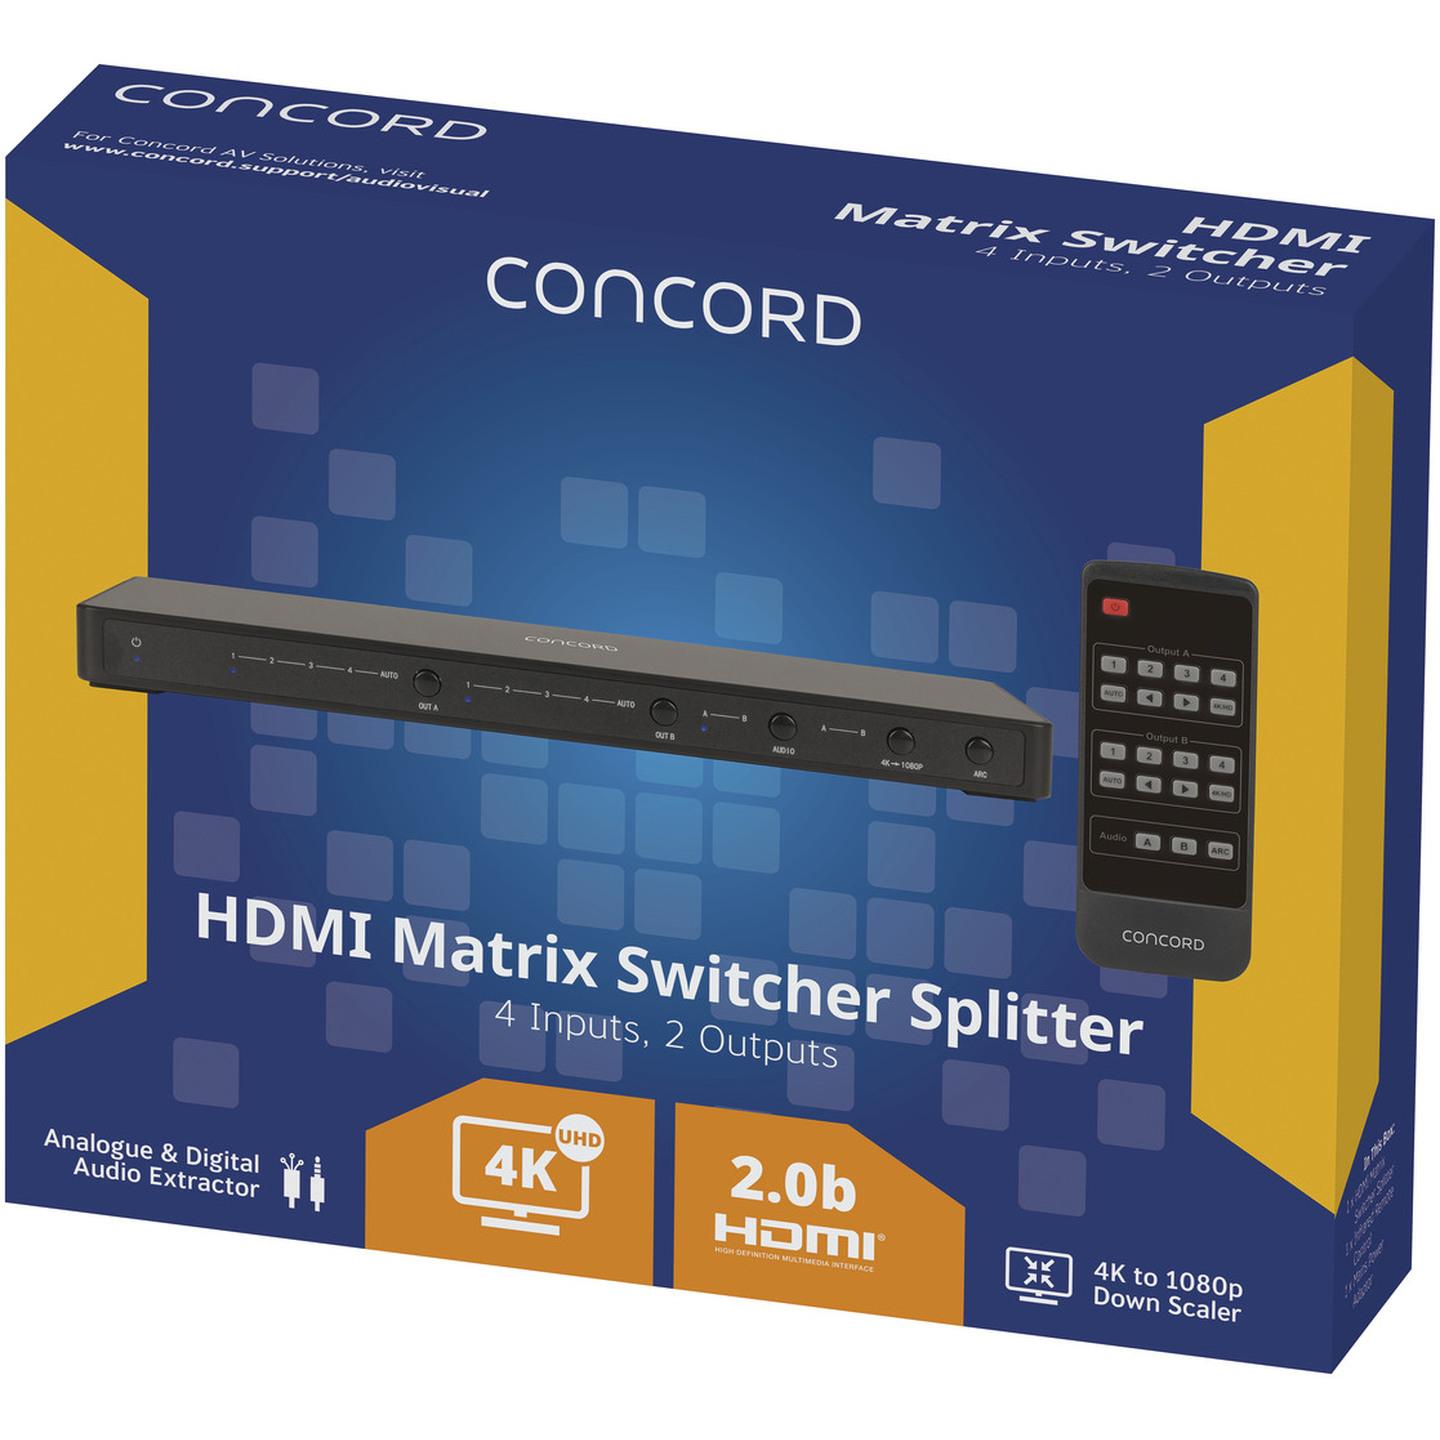 Concord 4x2 4K HDMI Matrix Switcher Splitter